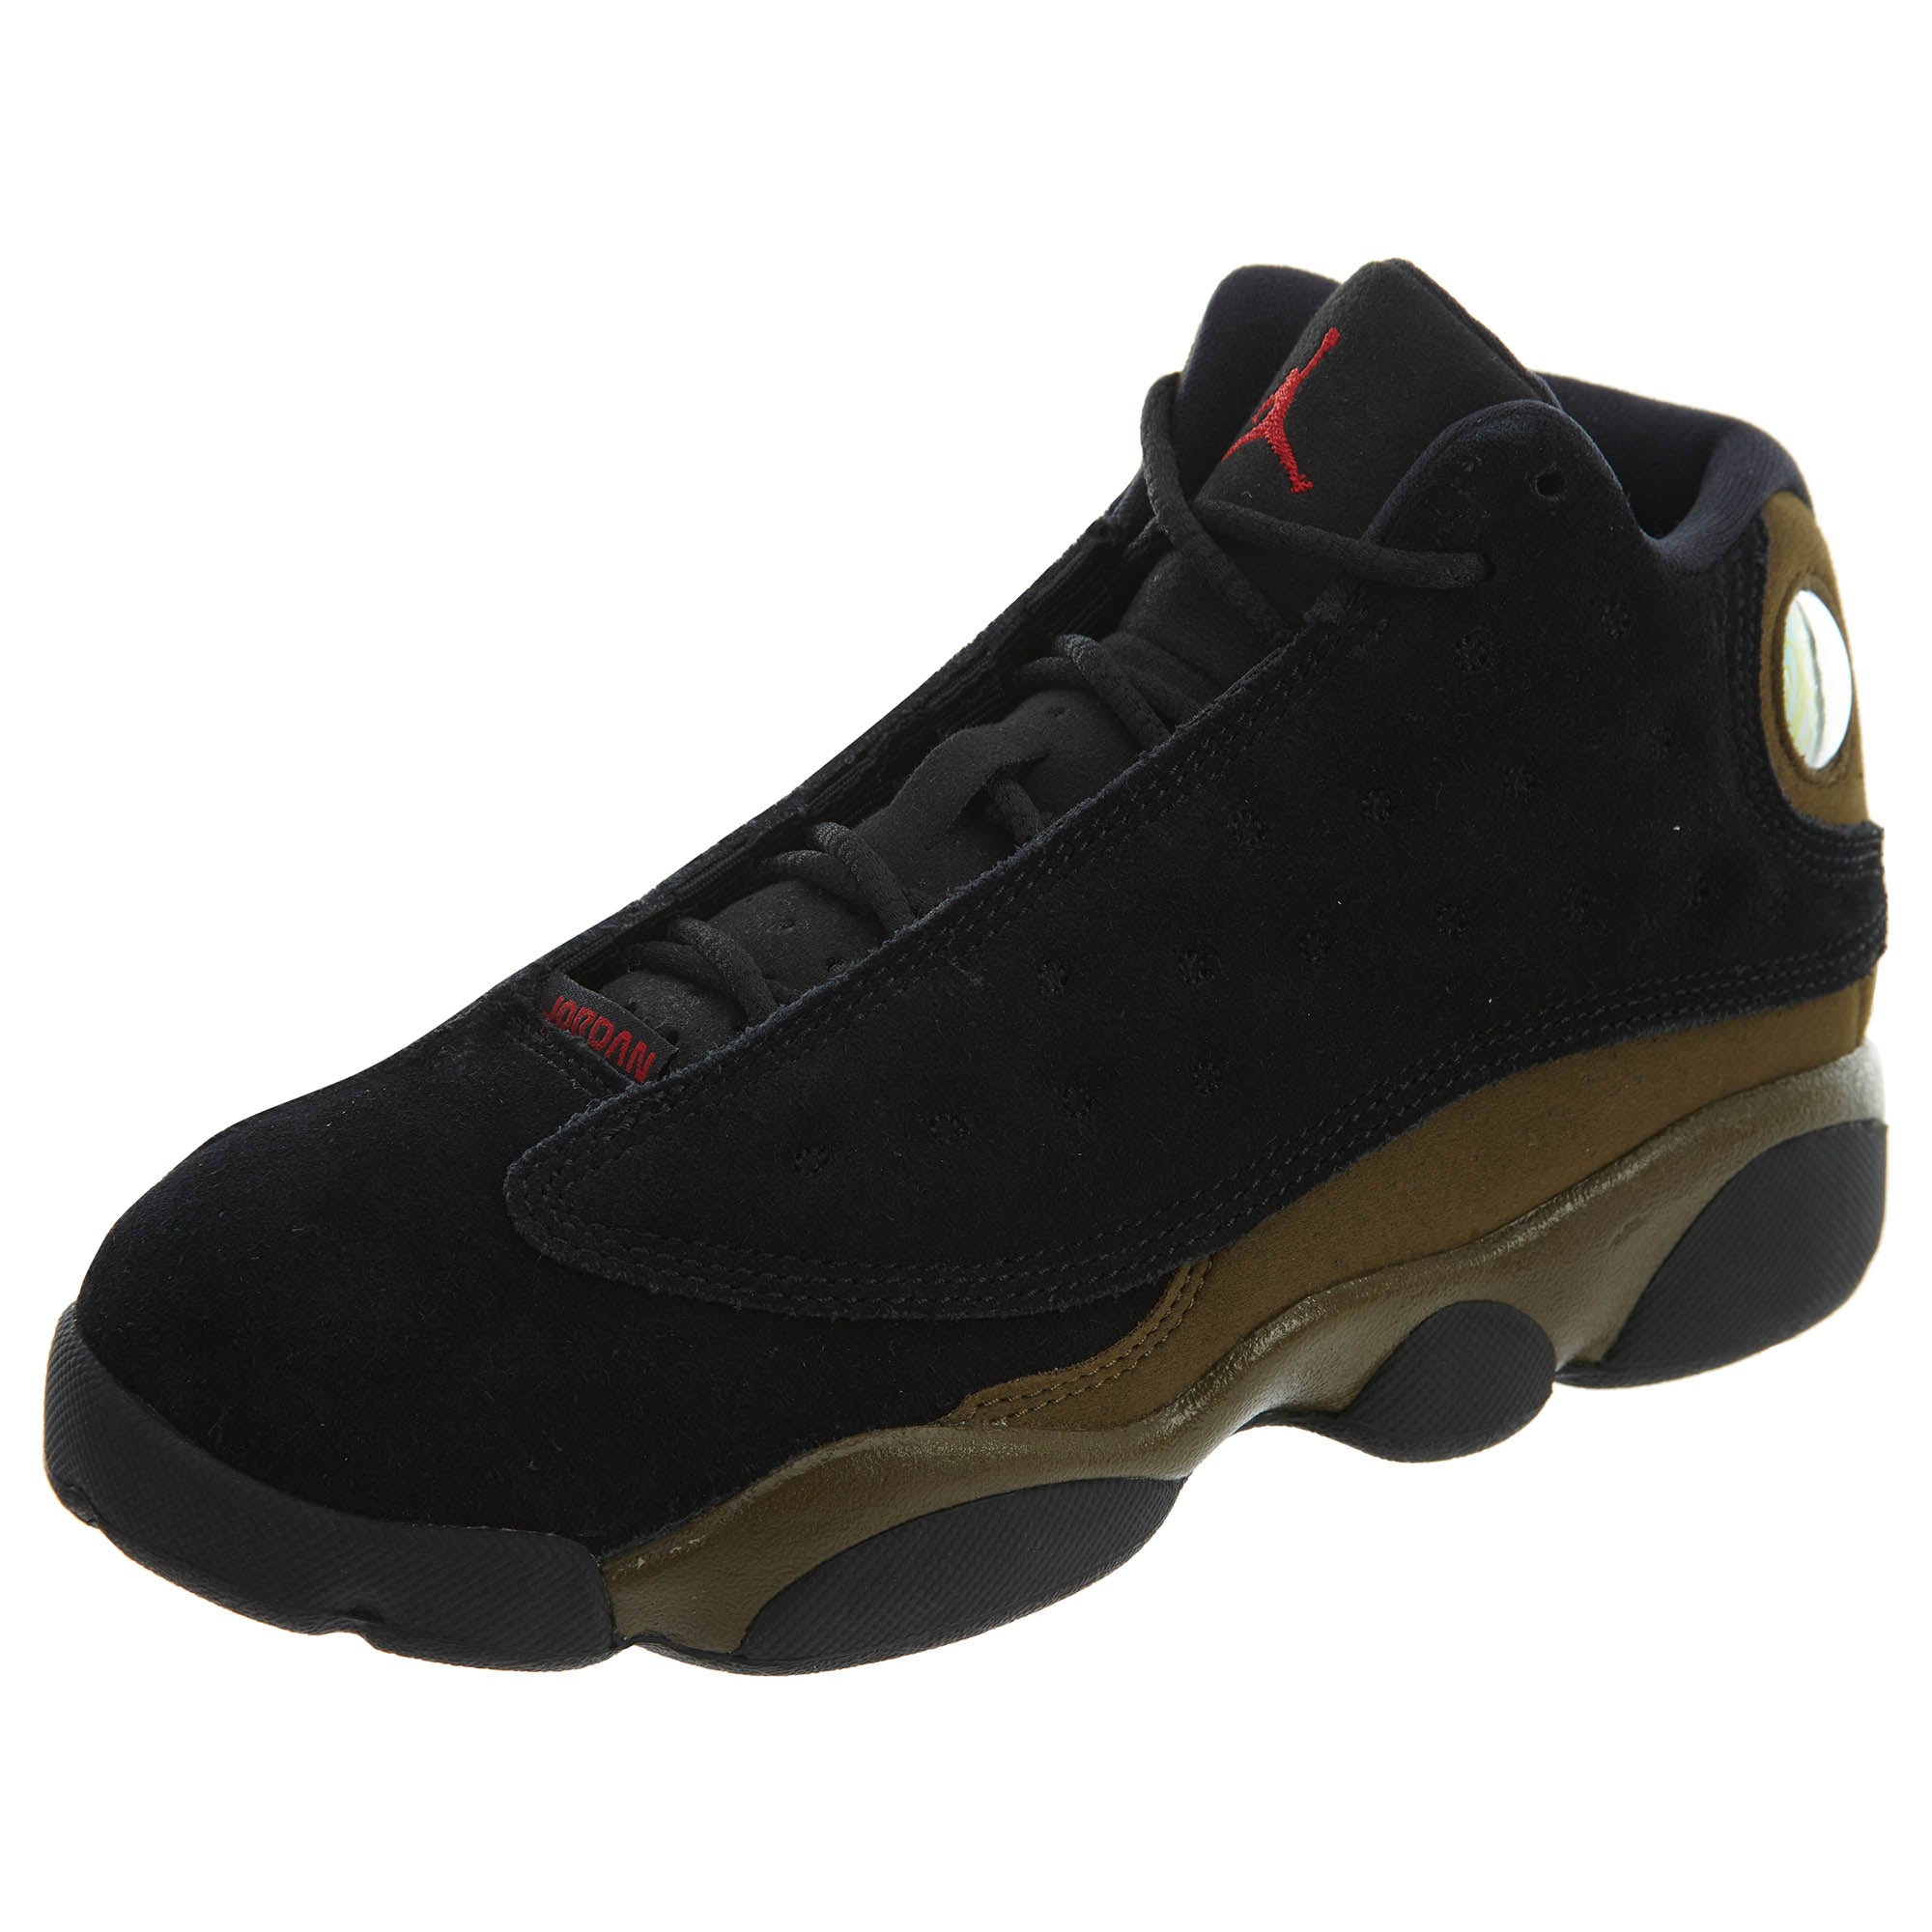 Jordan 13 Retro Little Kids' Basketball Shoes Black Boys / Girls Style :414575